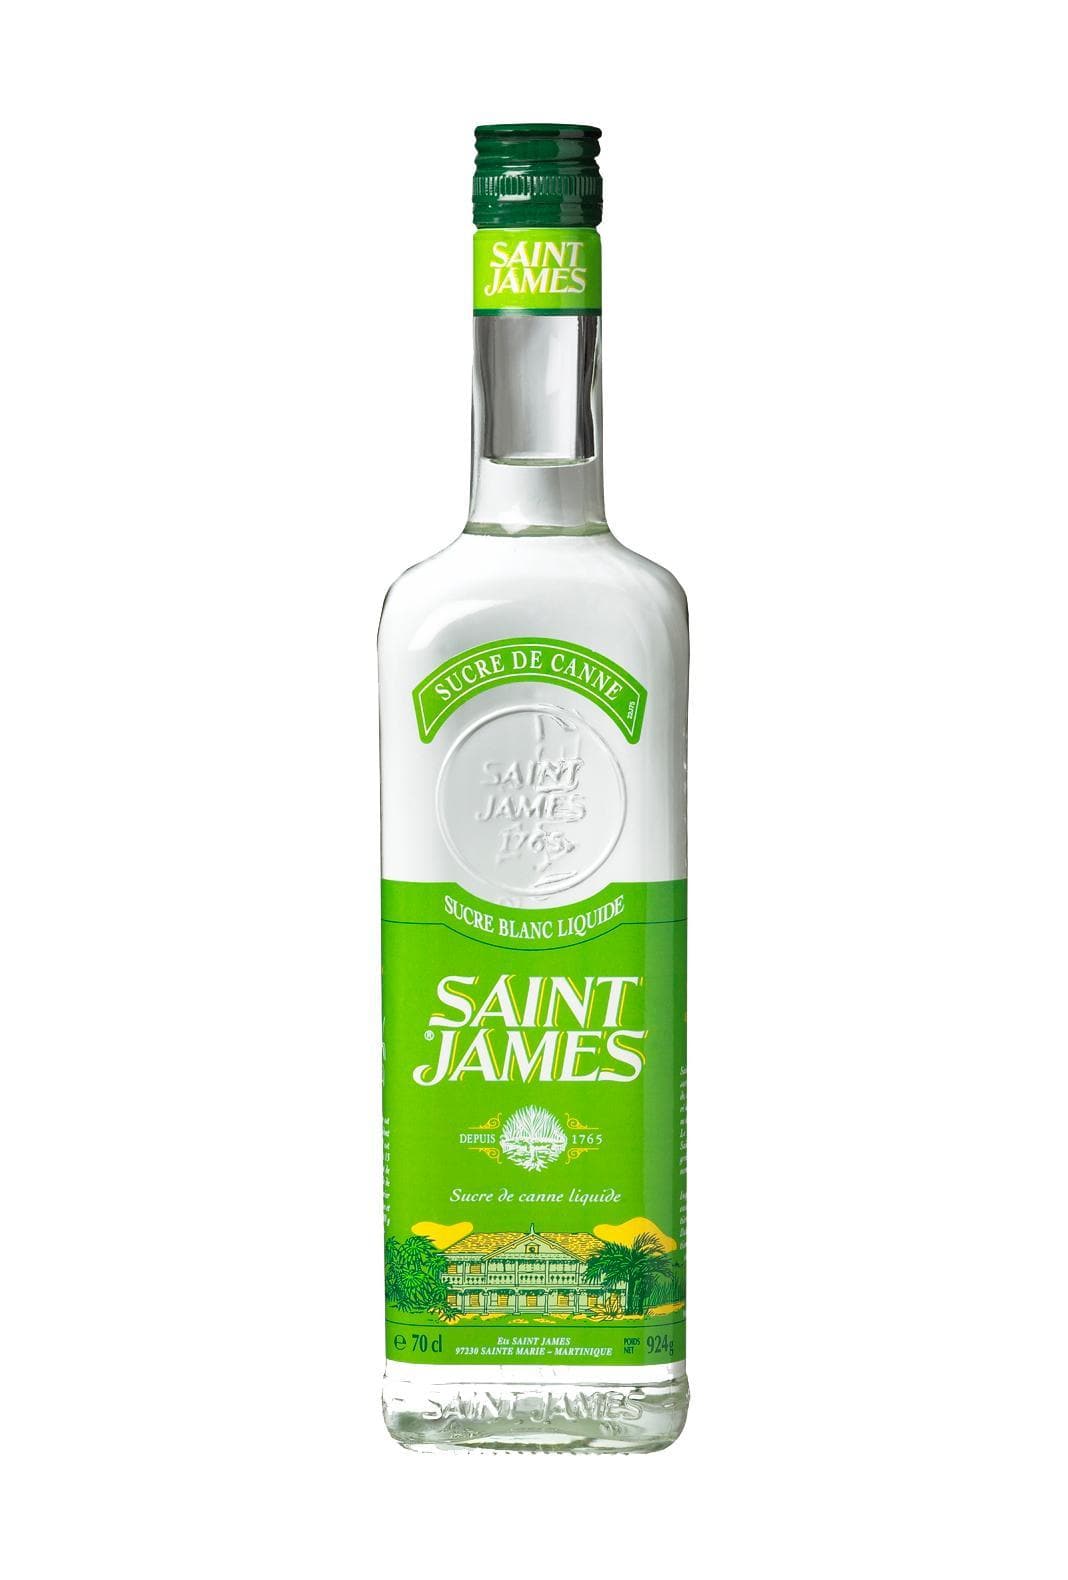 St James Sucre de Canne (Sugar cane syrup) 700ml | Rum | Shop online at Spirits of France